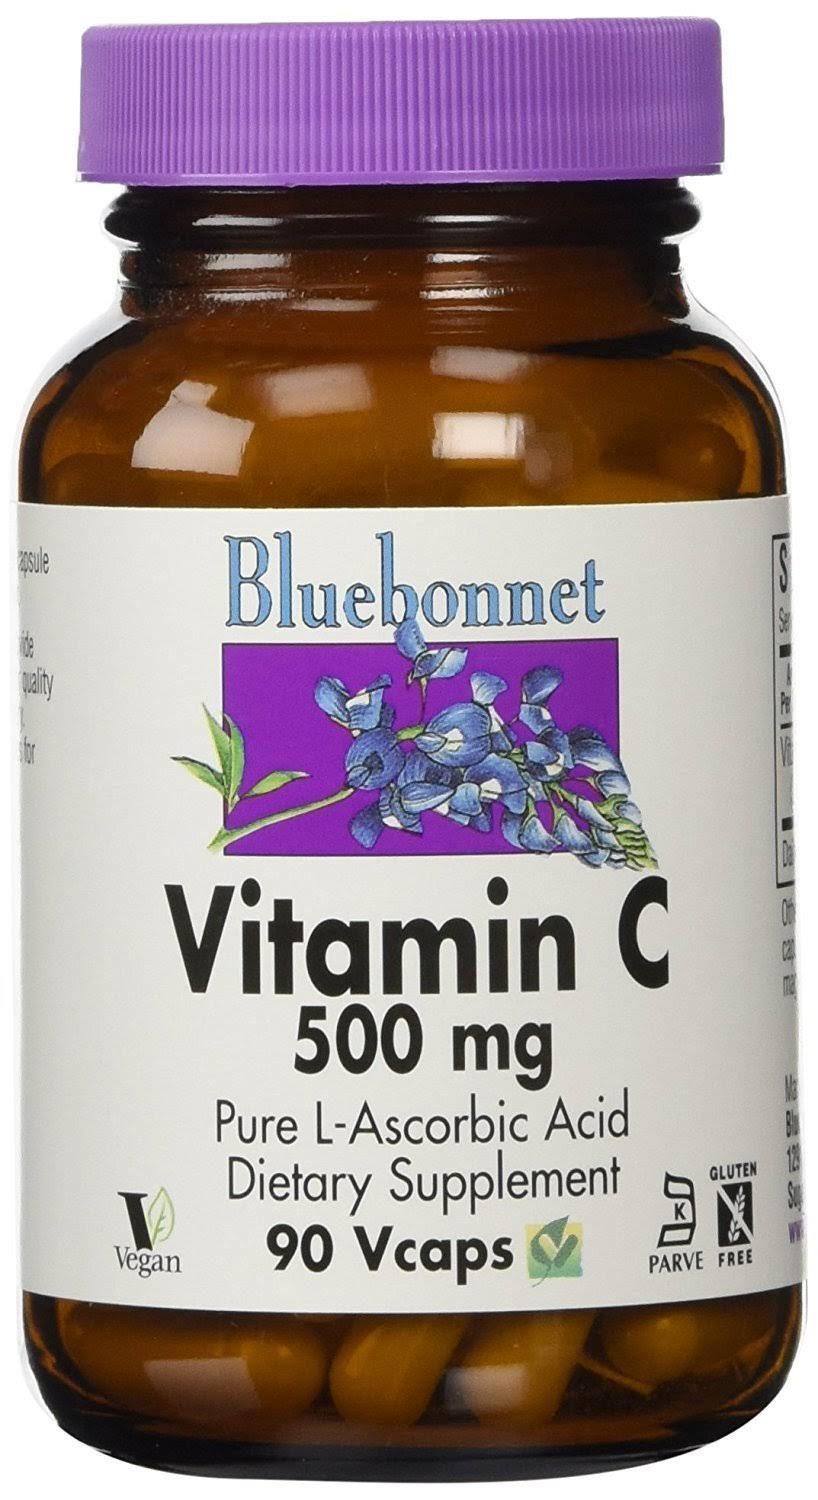 Bluebonnet Vitamin C 500 Mg-90 Vegetable Capsules